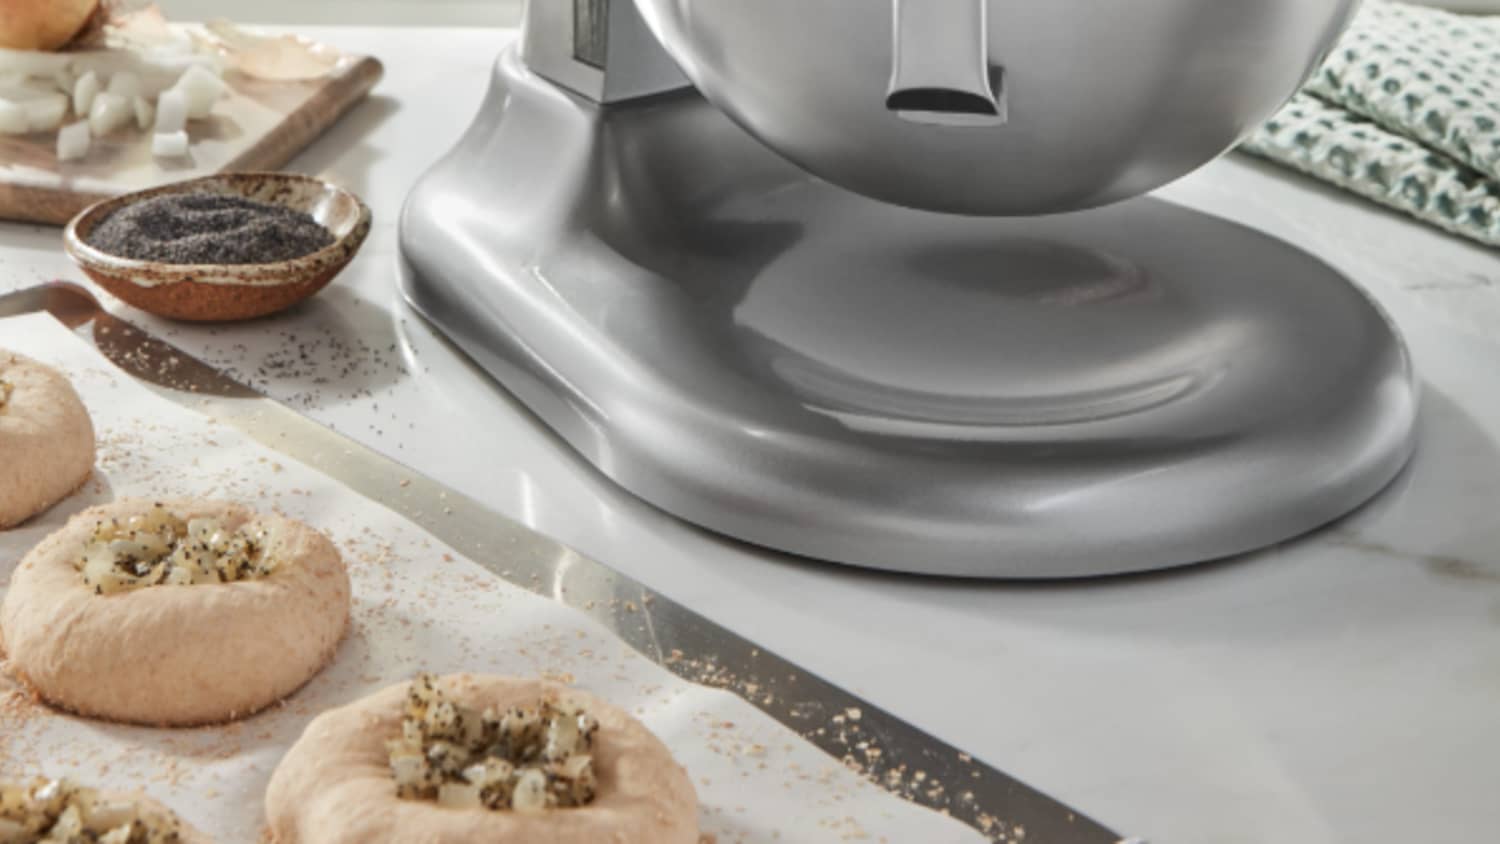 KitchenAid 7 Quart Bowl-Lift Stand Mixer comes with redesigned premium  touchpoints » Gadget Flow